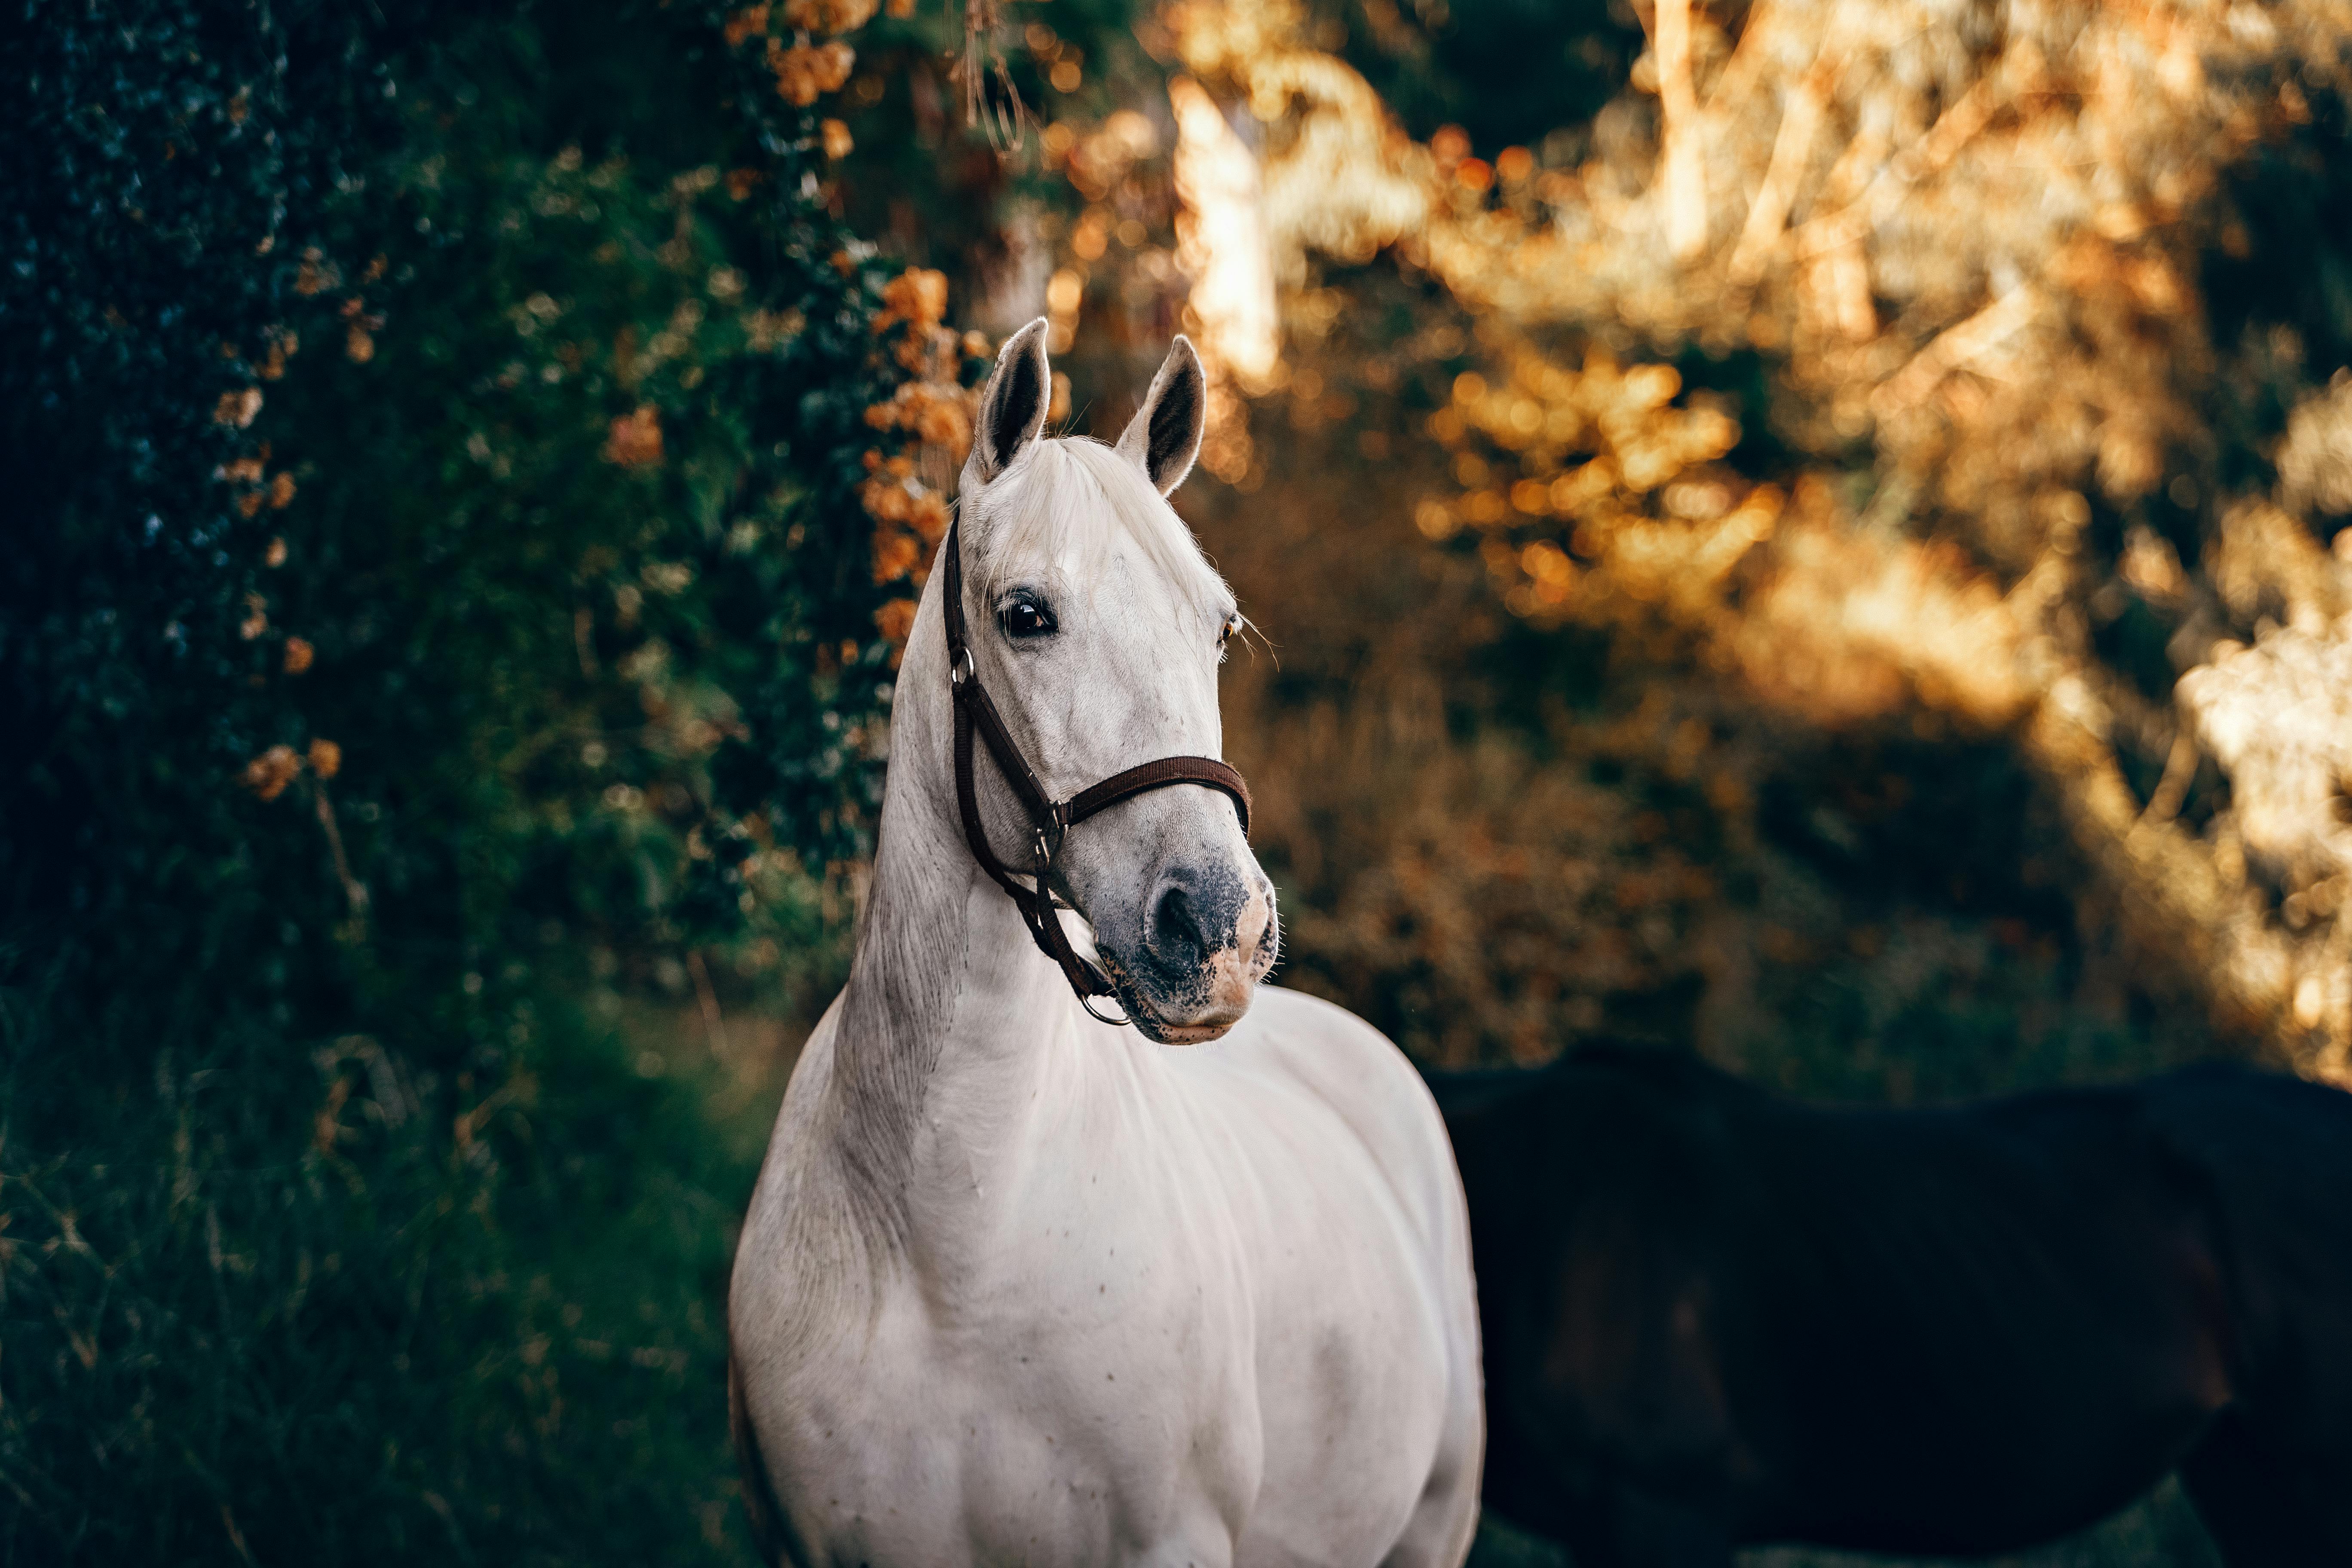 7,000+ Best Horse Photos · 100% Free